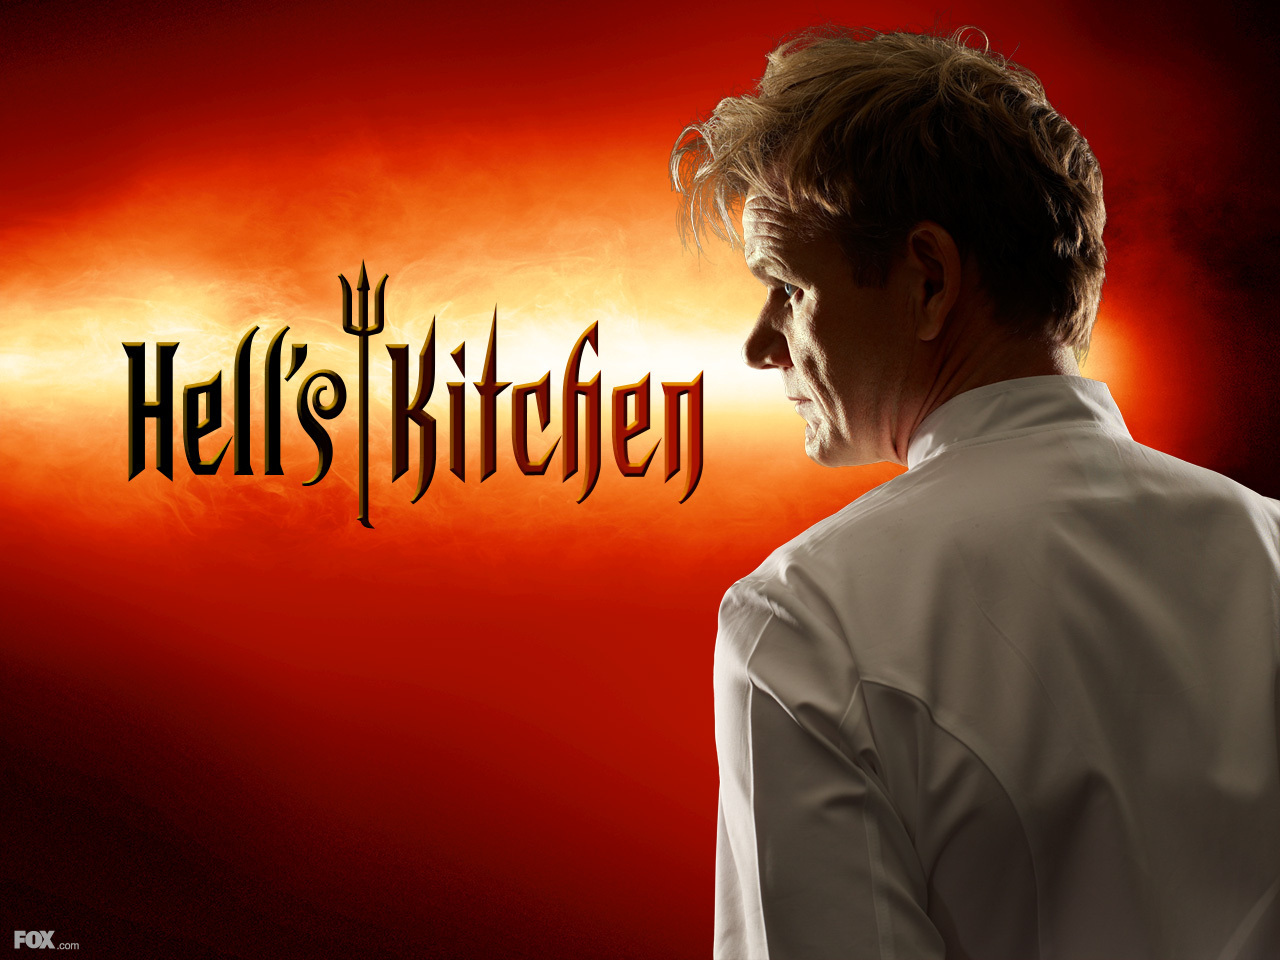 FOX Network Show Hell's Kitchen